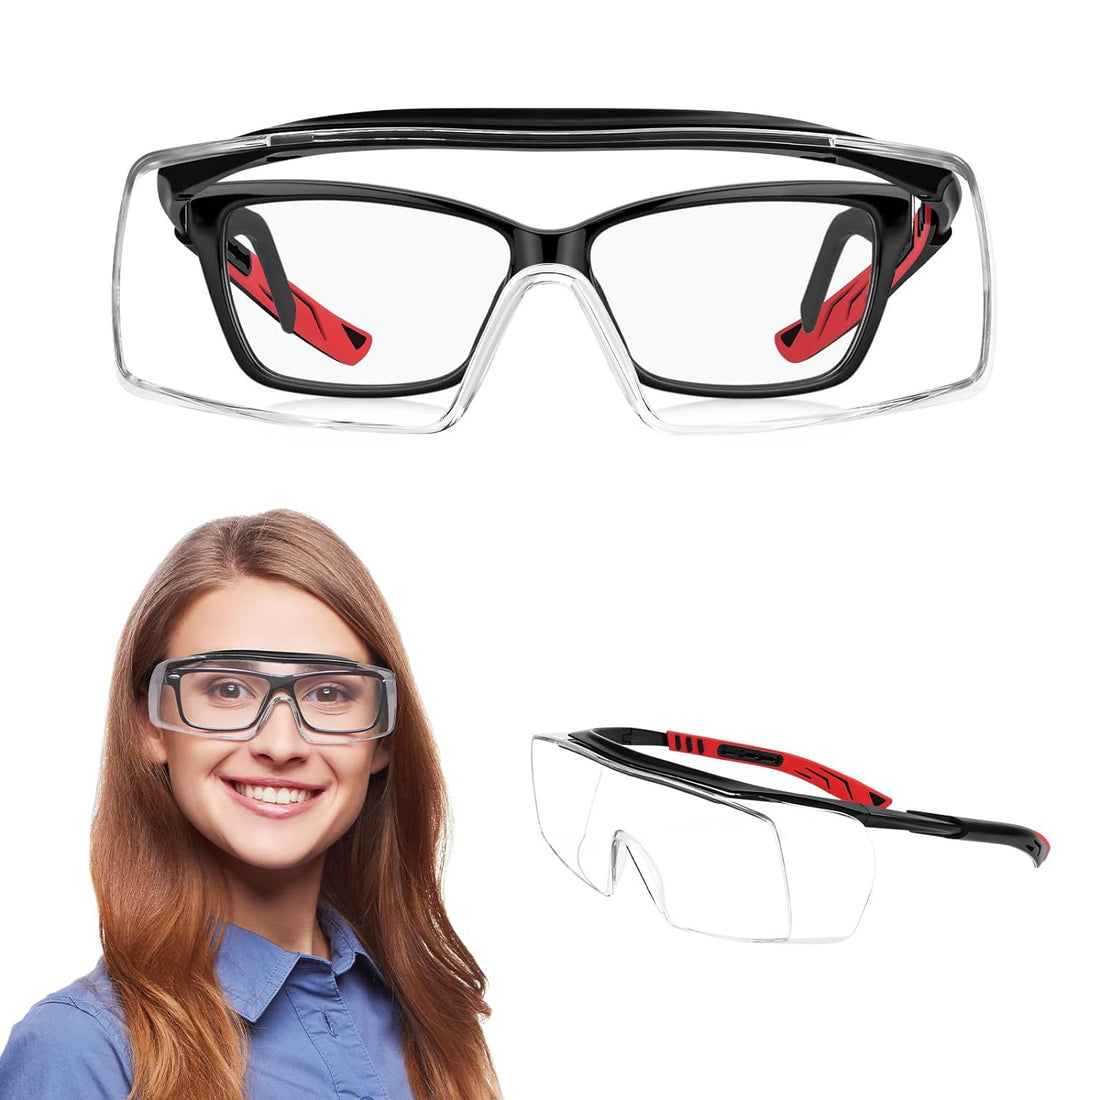 Dubofu Safety Goggles Over Glasses, Anti-Fog Clear Wraparound Lens, Safety Glasses Over Eyeglasses, Anti-Scratch Lab or Shooting Glasses Eye Protection, Adjustable, UV Protective Eyewear ANSI Z87.1